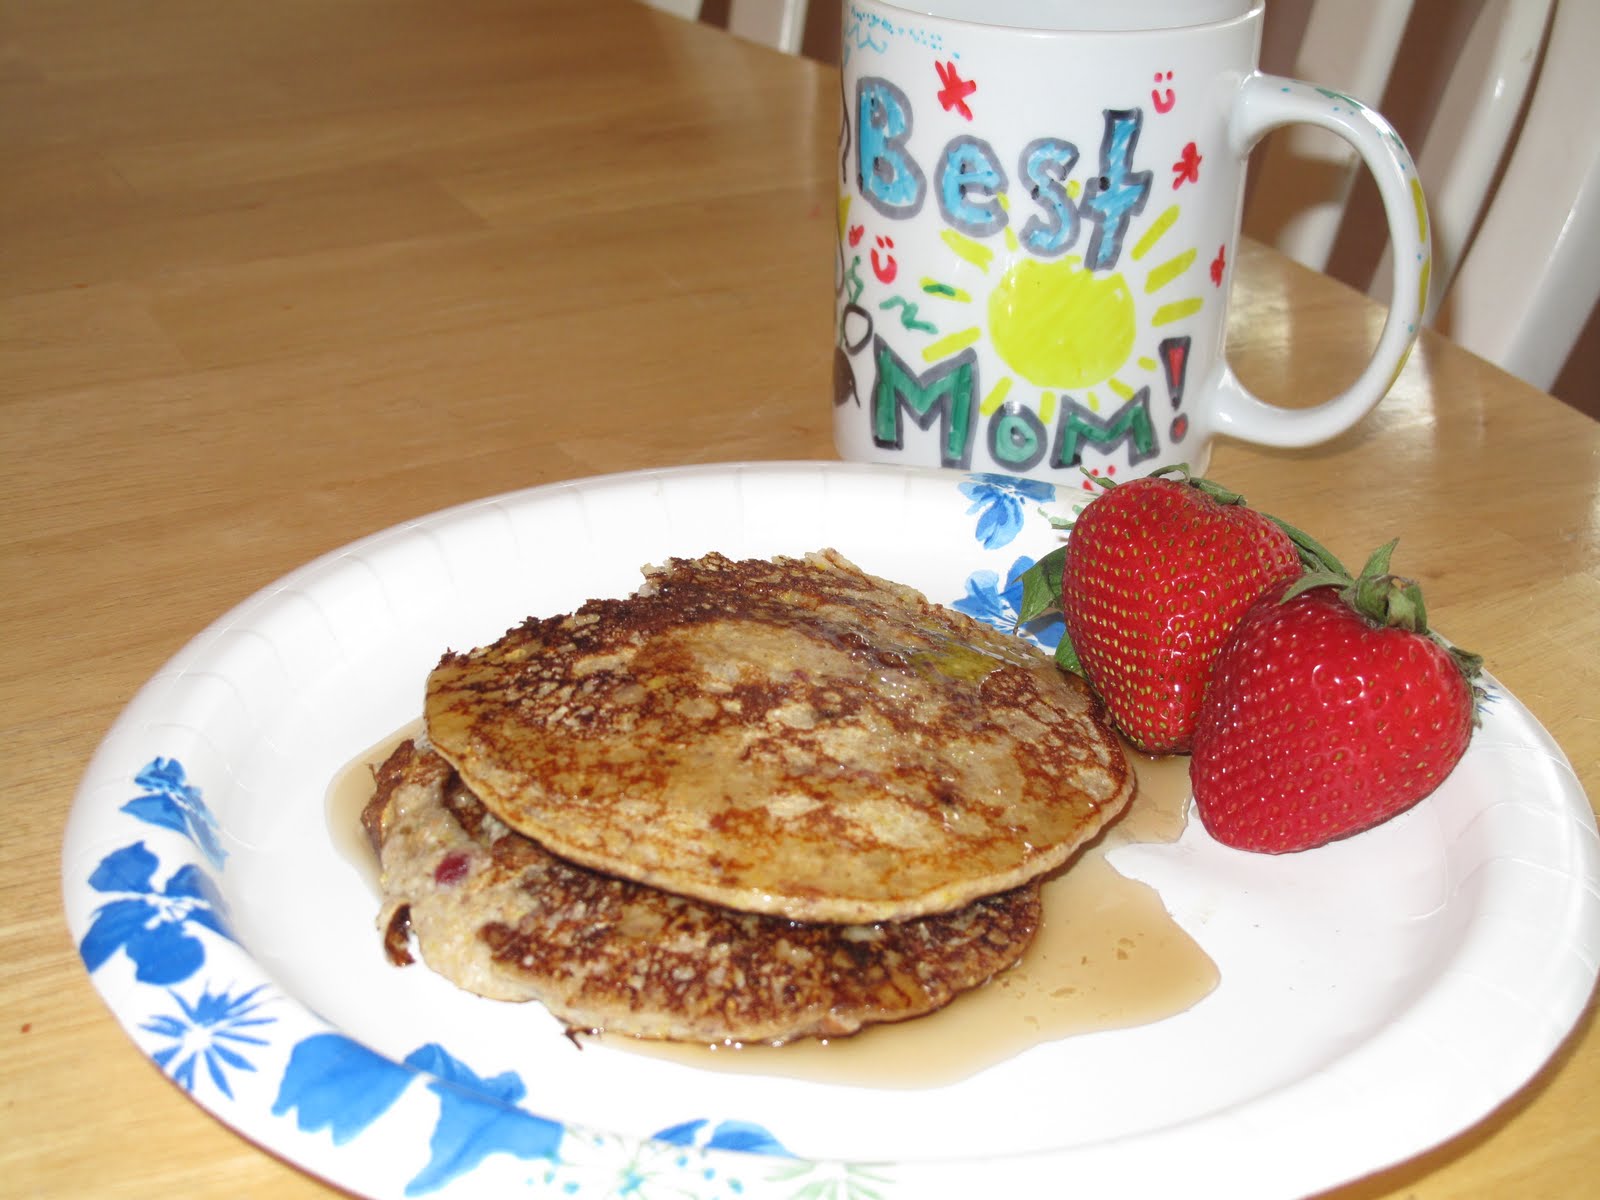 My Medifast Hmr T Journal Pancakes